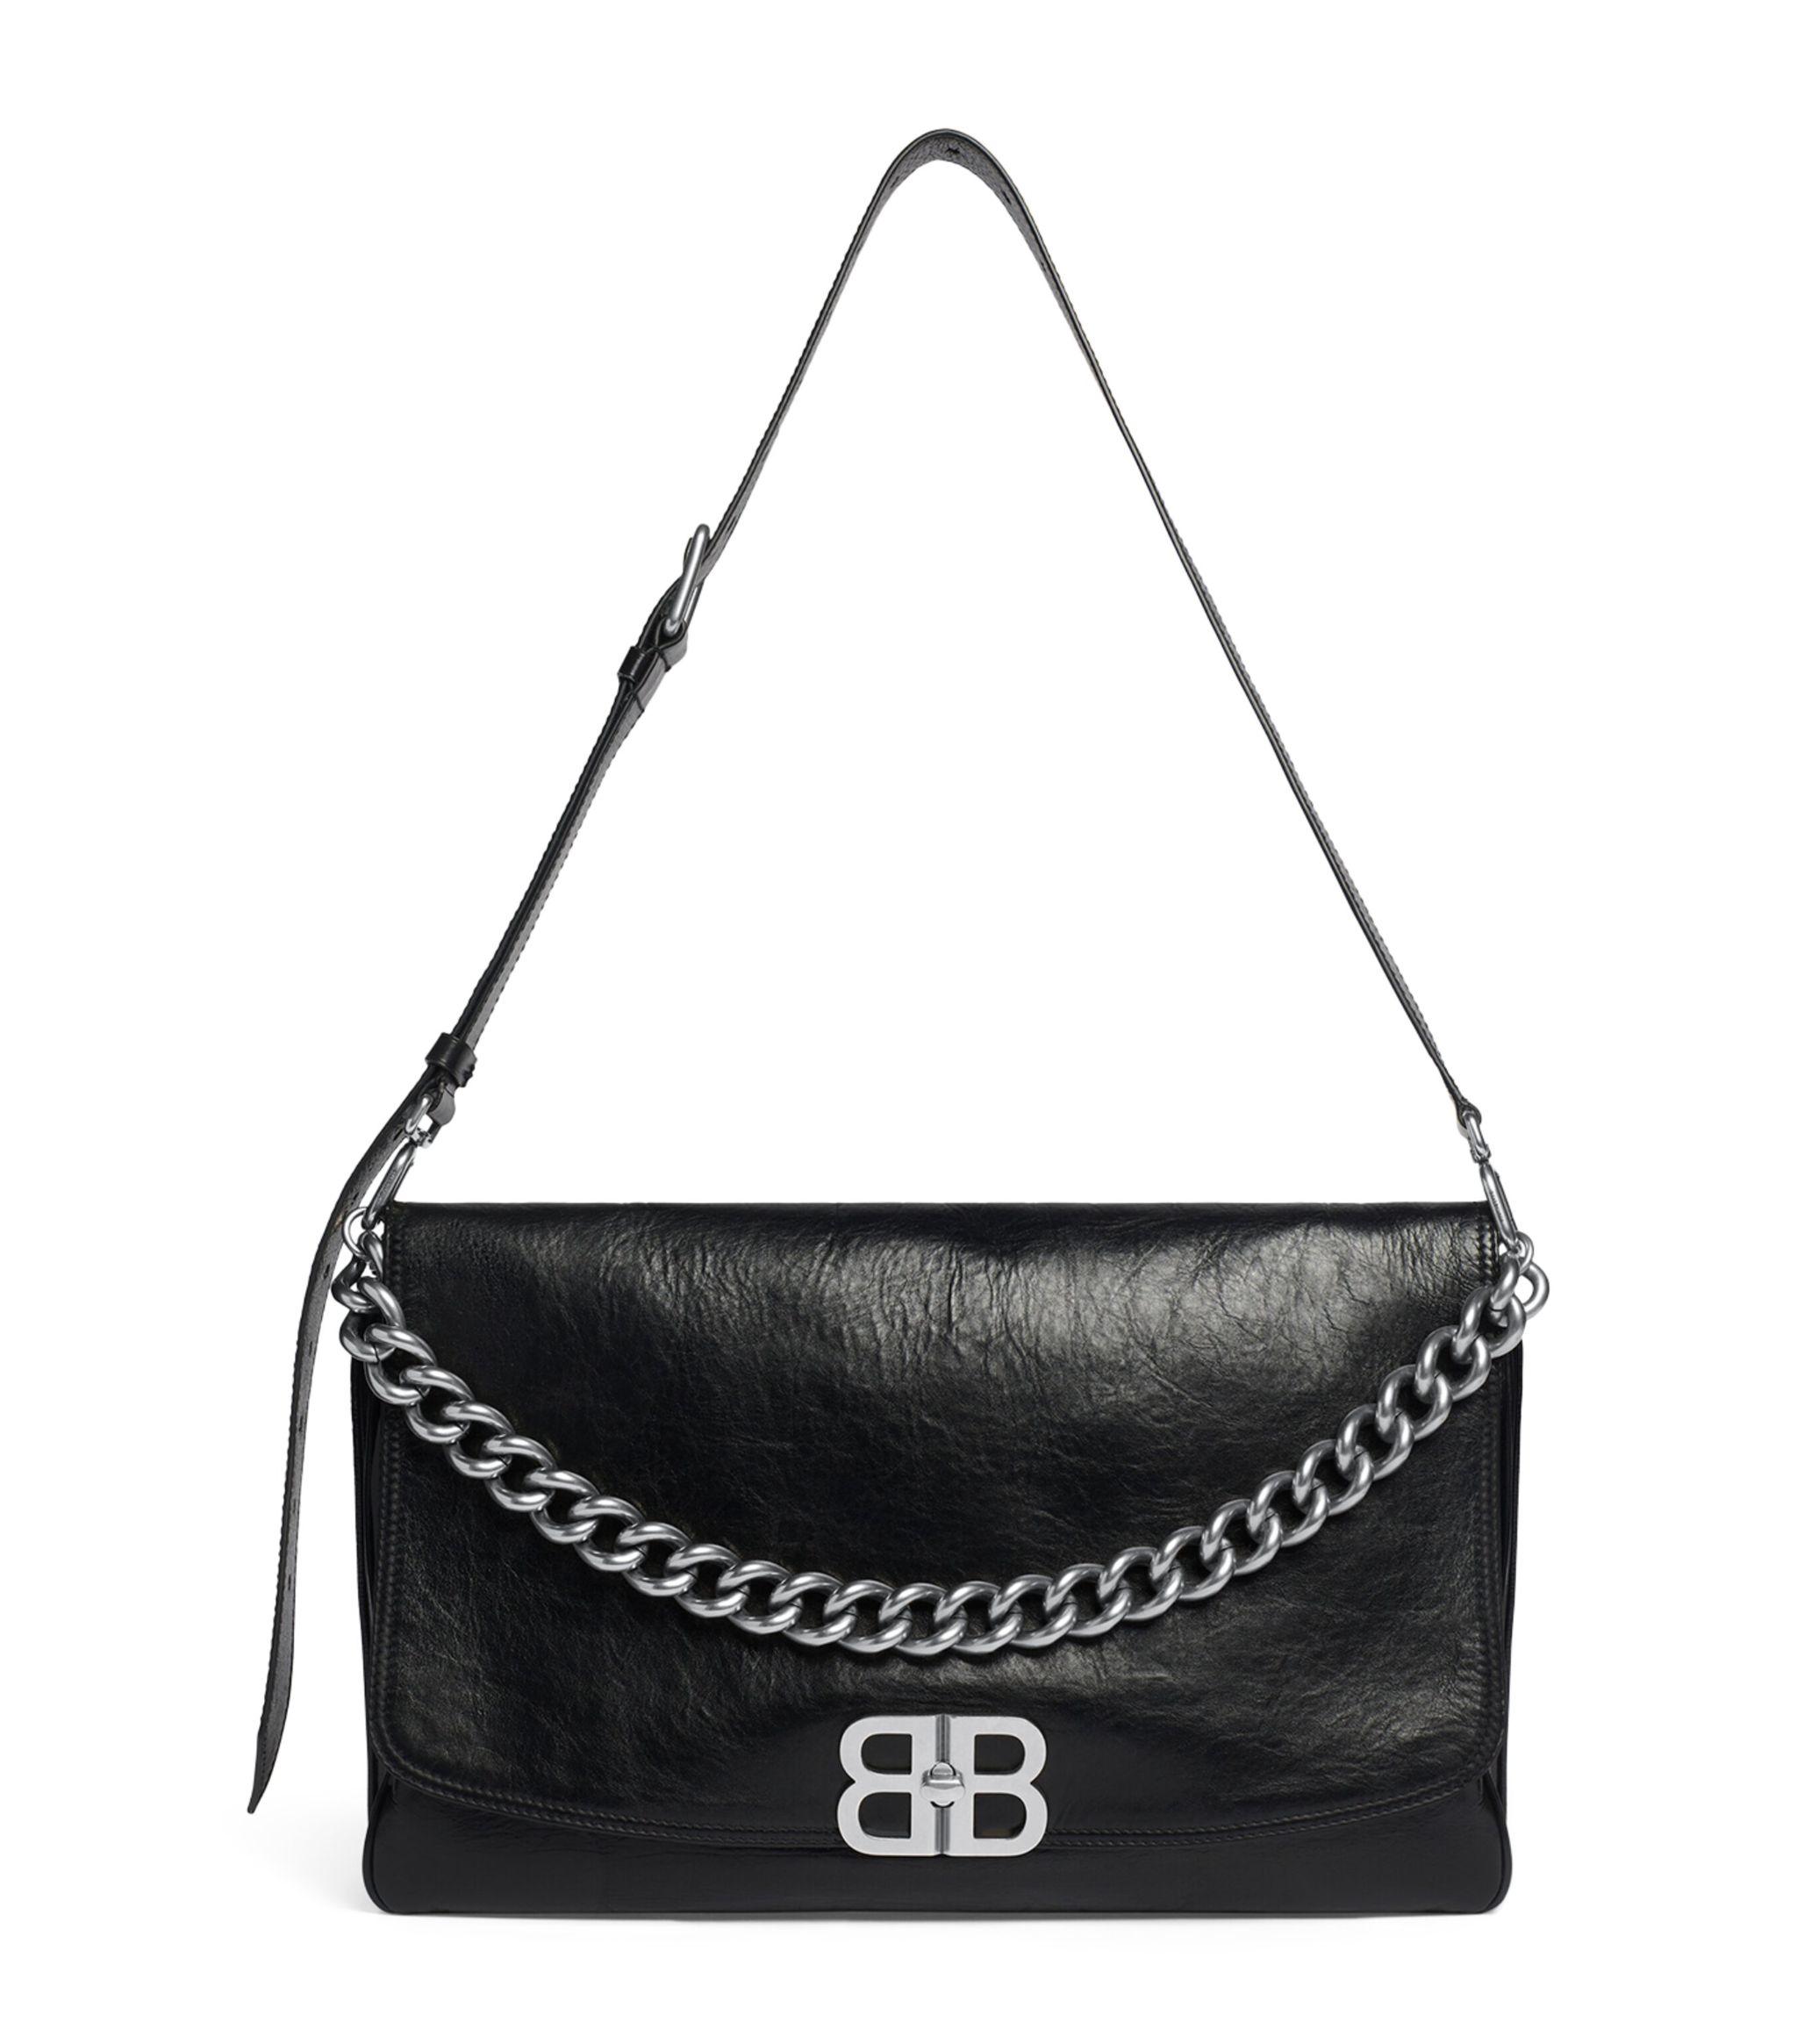 Balenciaga Women's Soft Leather Shoulder Bag